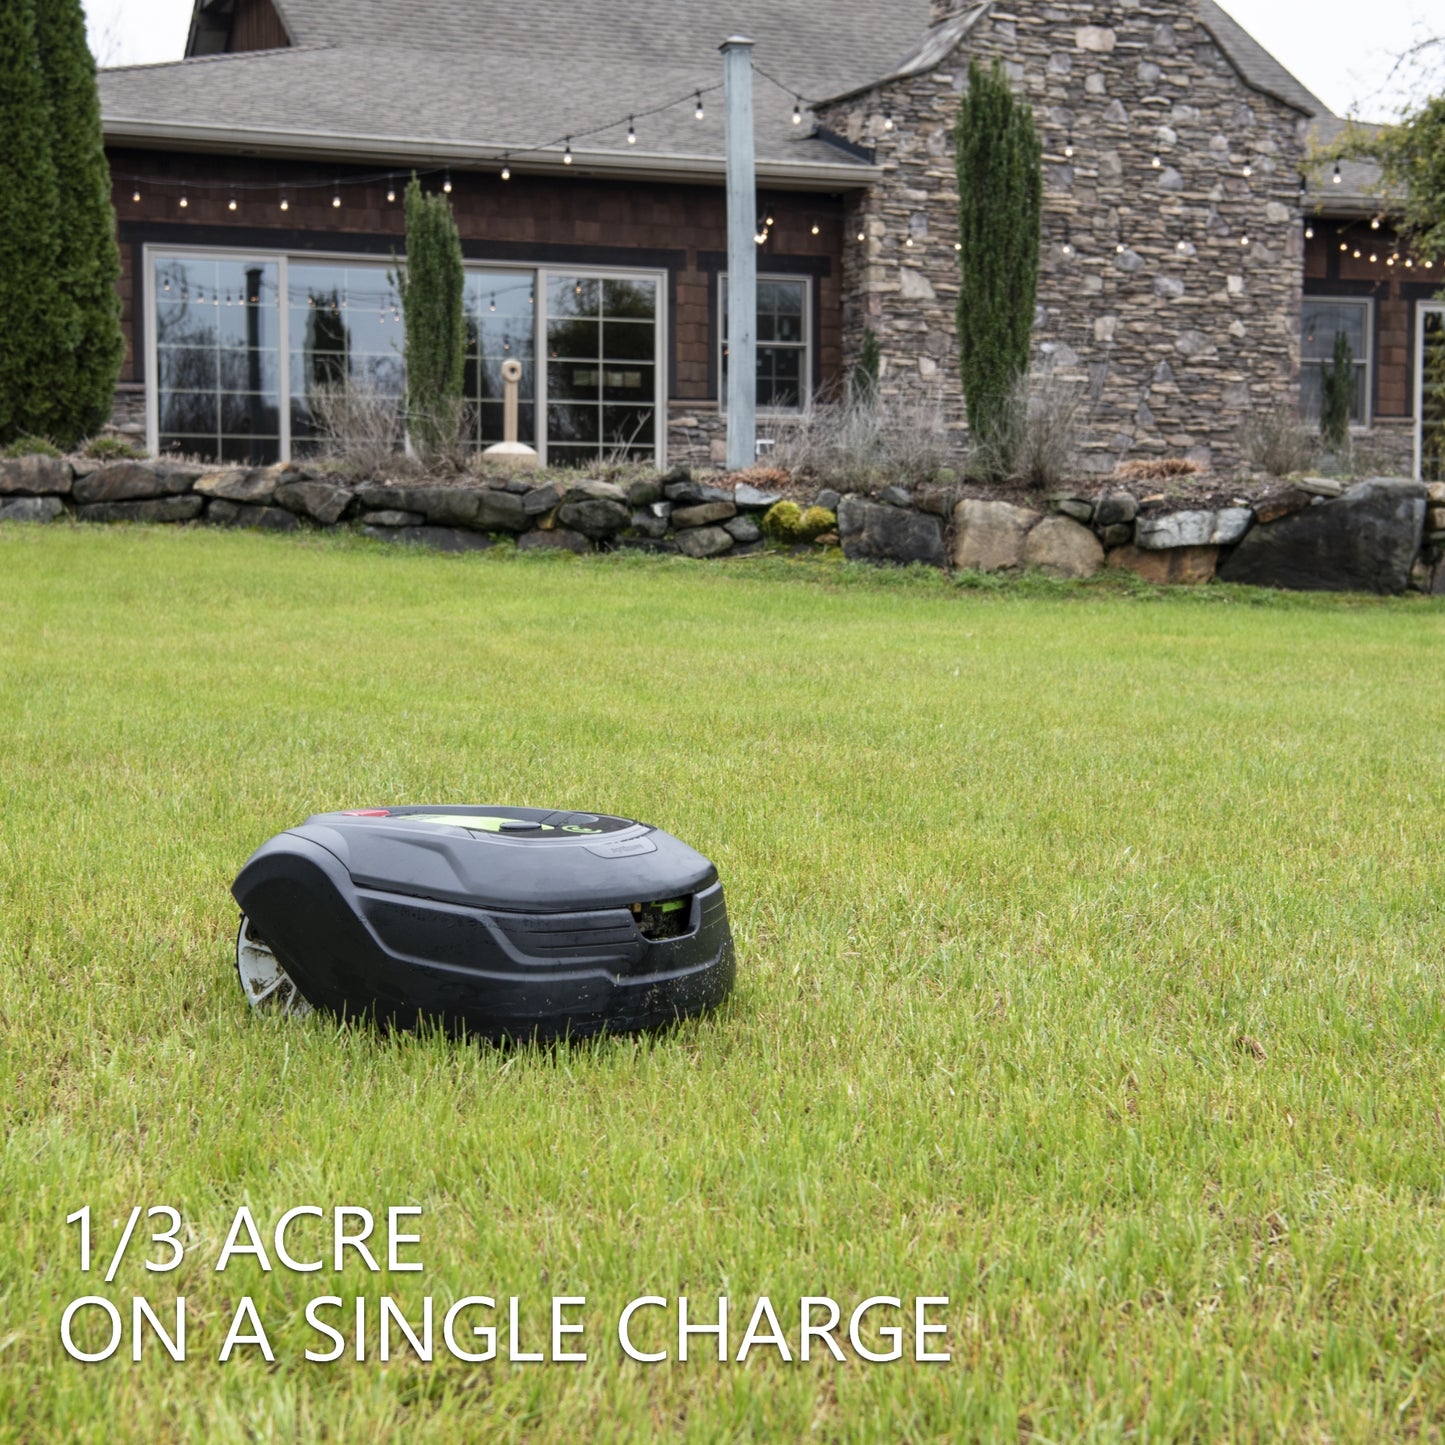 optimow® 33H Robotic Lawn Mower